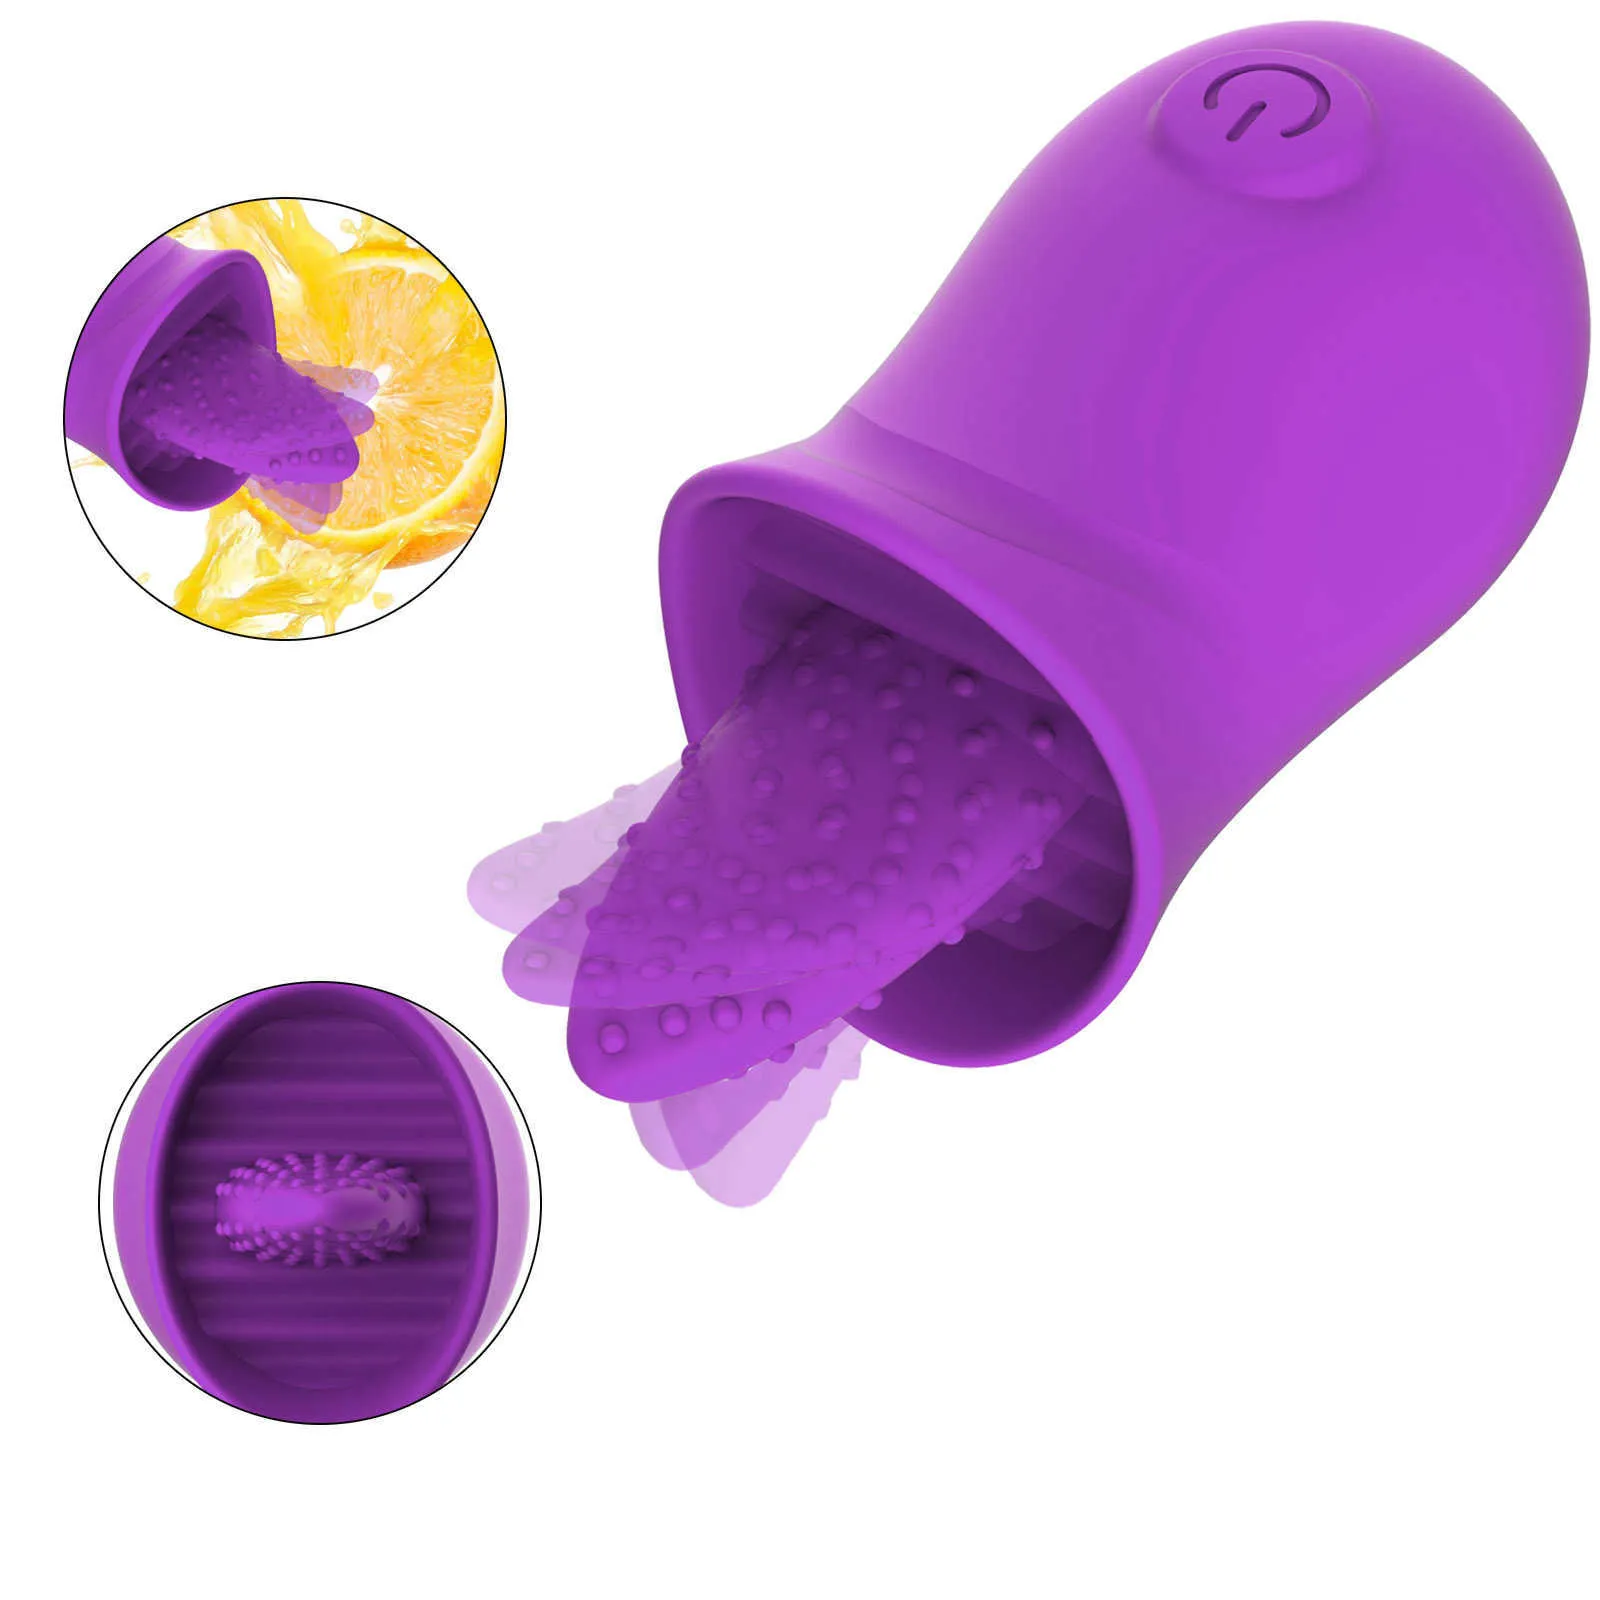 Xvleps Sucking Tongue Vibrator Clit Nipple Sucker for Women Dildo Clitoris Stimulator Oral Pussy Licking Sex Toys for Women 2021p0804